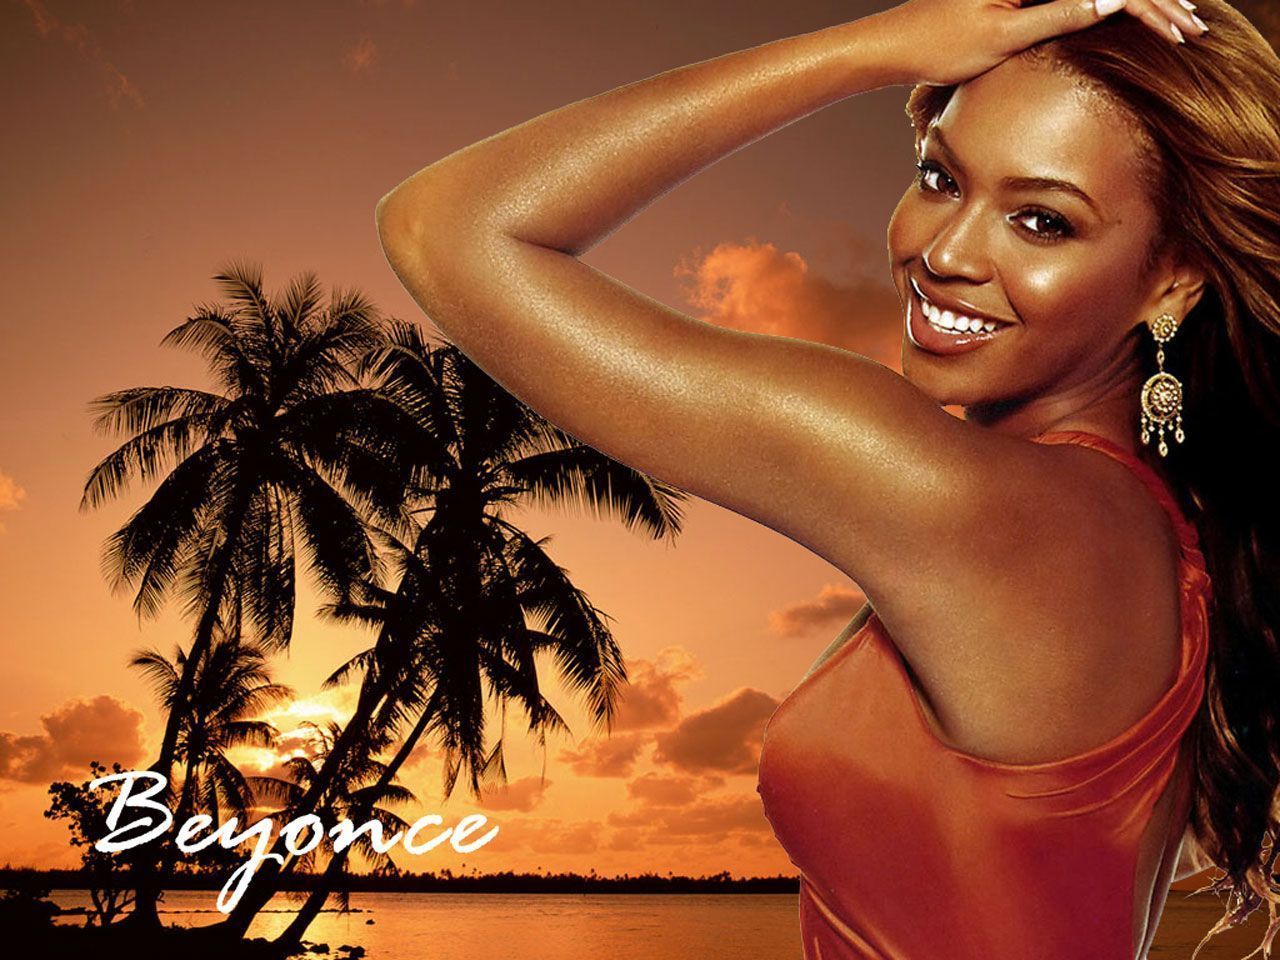 Beyonce Computer Wallpapers, Desktop Backgrounds 1280x960 ID